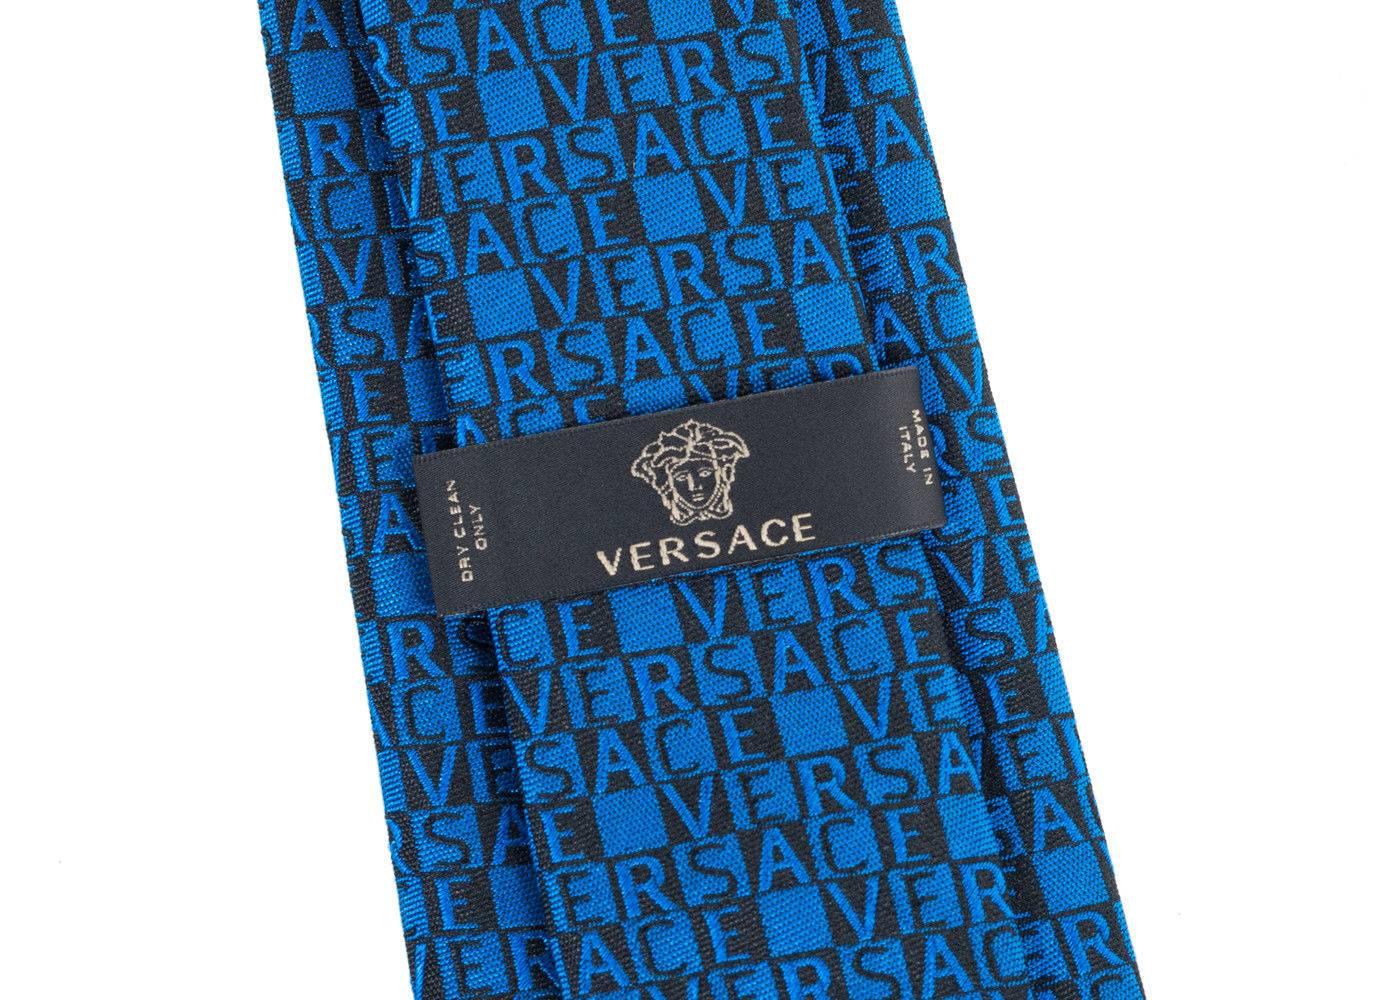 Brand New Versace Men's Ties
Original Tags
Retails in Stores & Online for $175
2.75